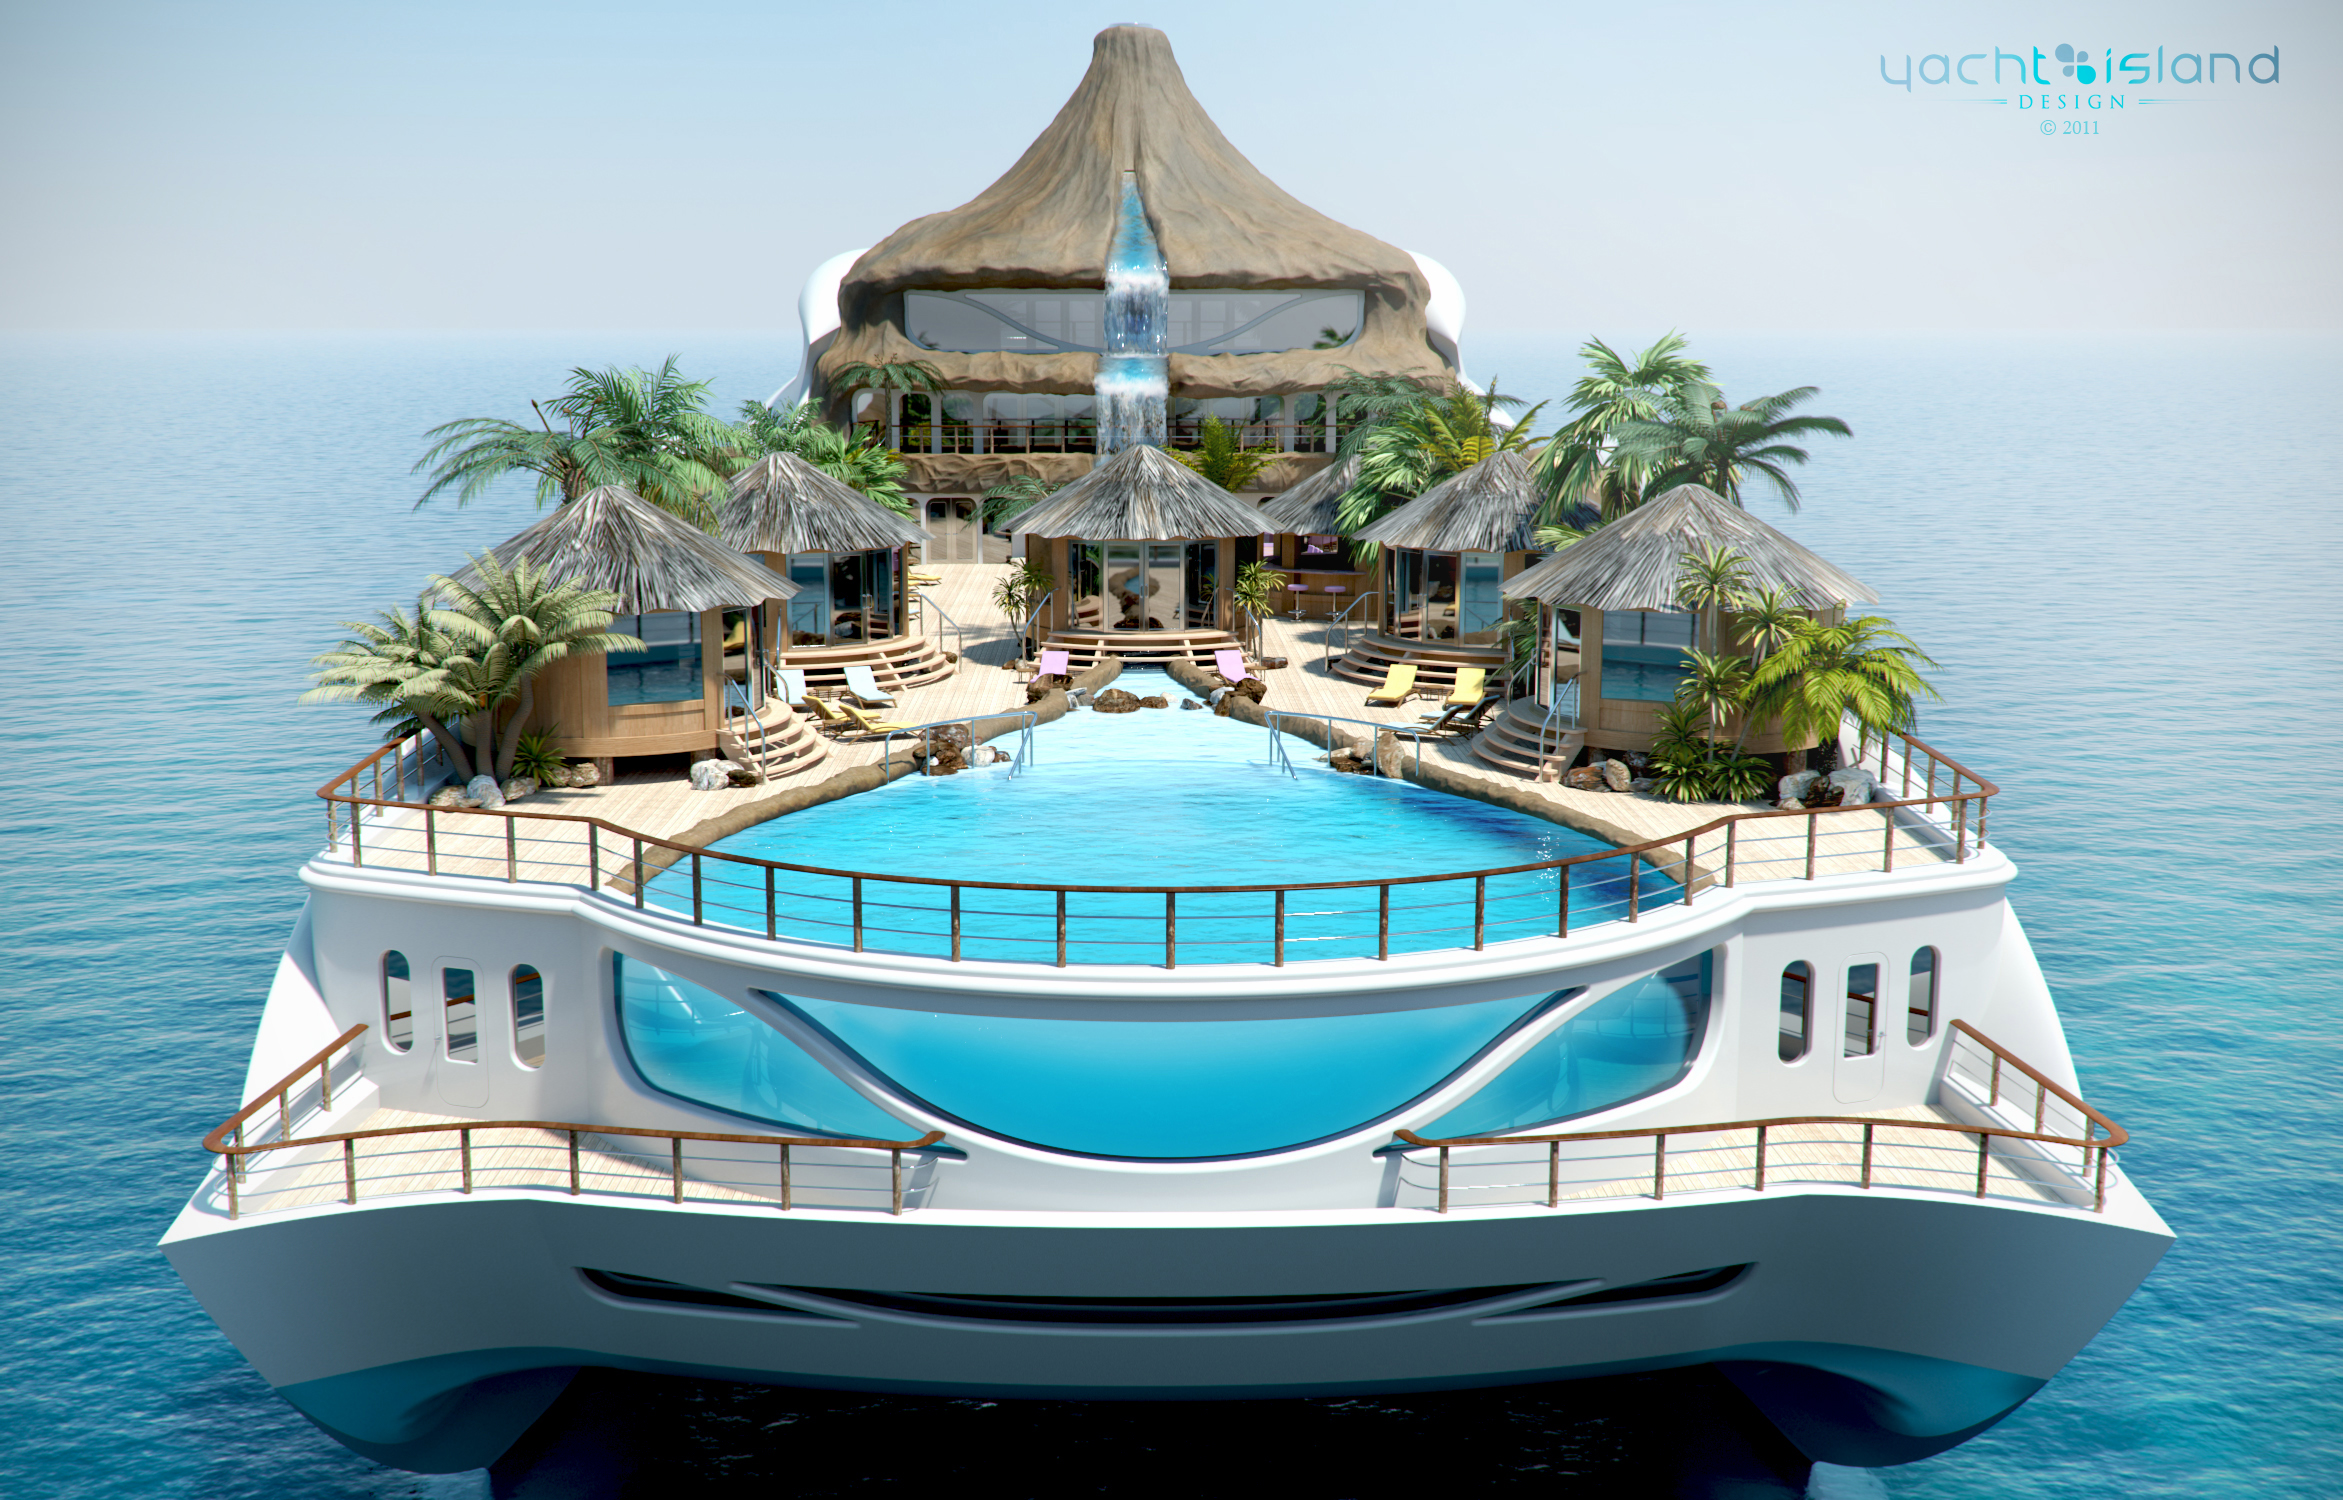 90m-%E2%80%98Tropical-Island-Paradise%E2%80%99-superyacht-by-Yacht-Island-Design-2.jpg